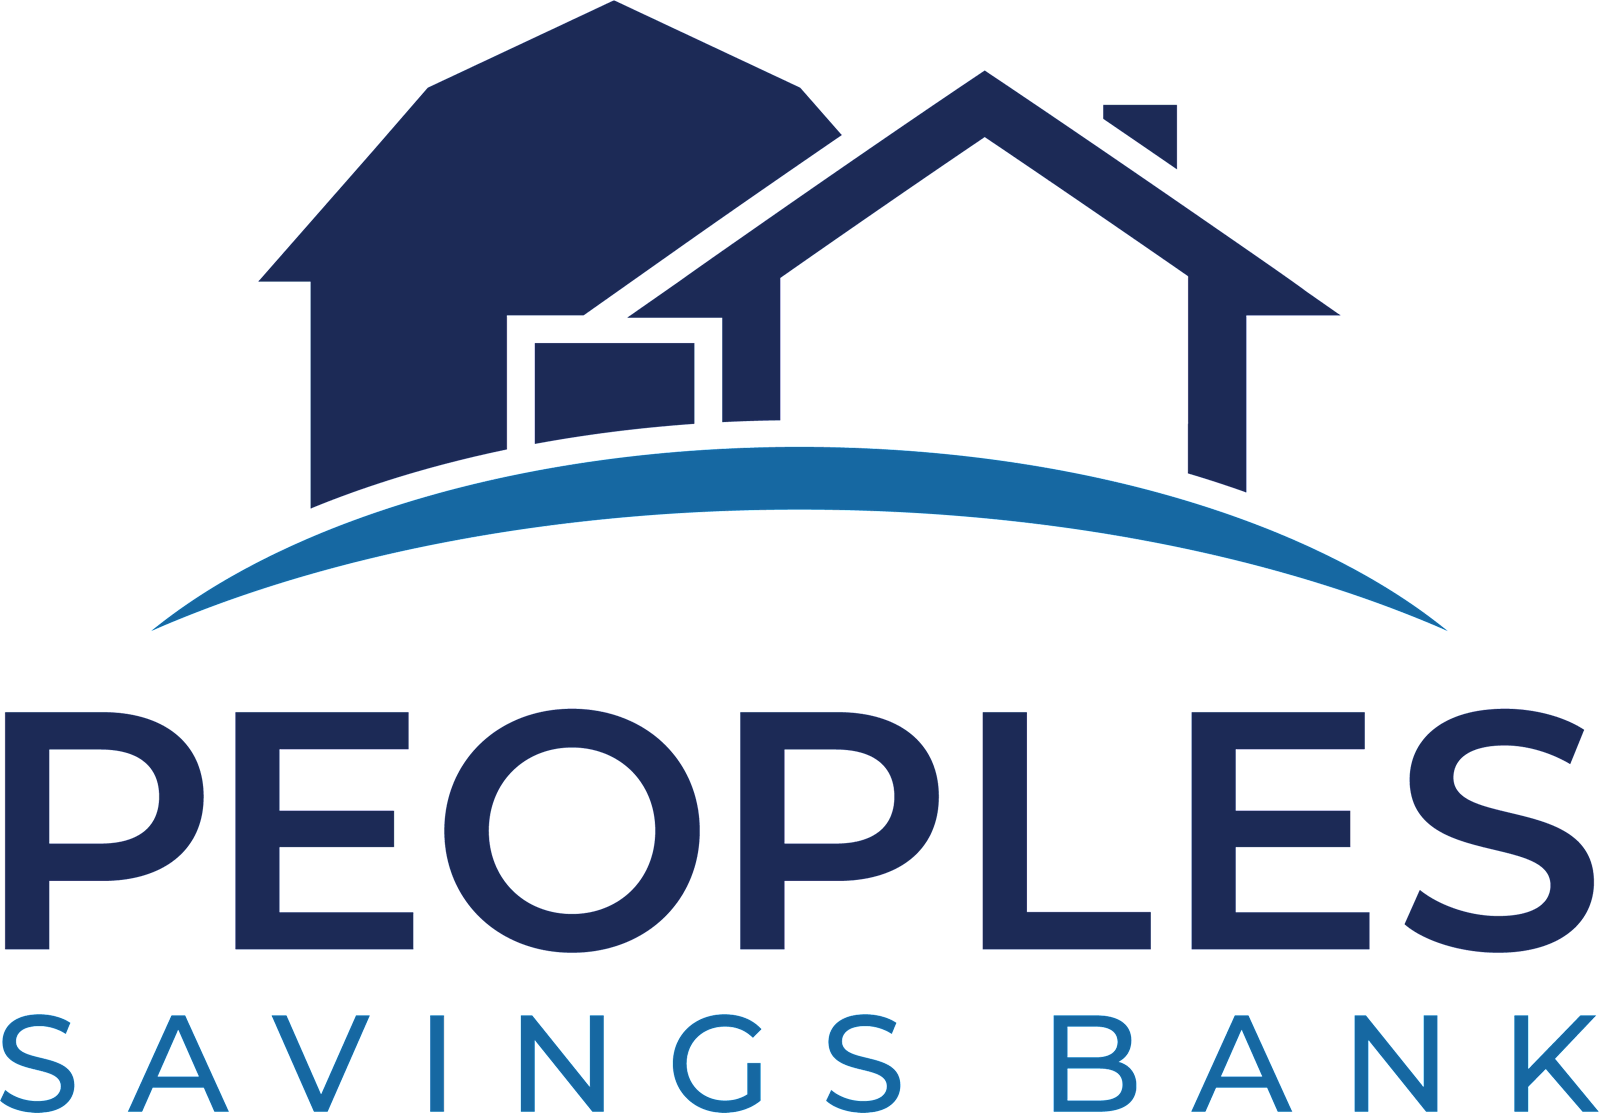 People Savings Bank